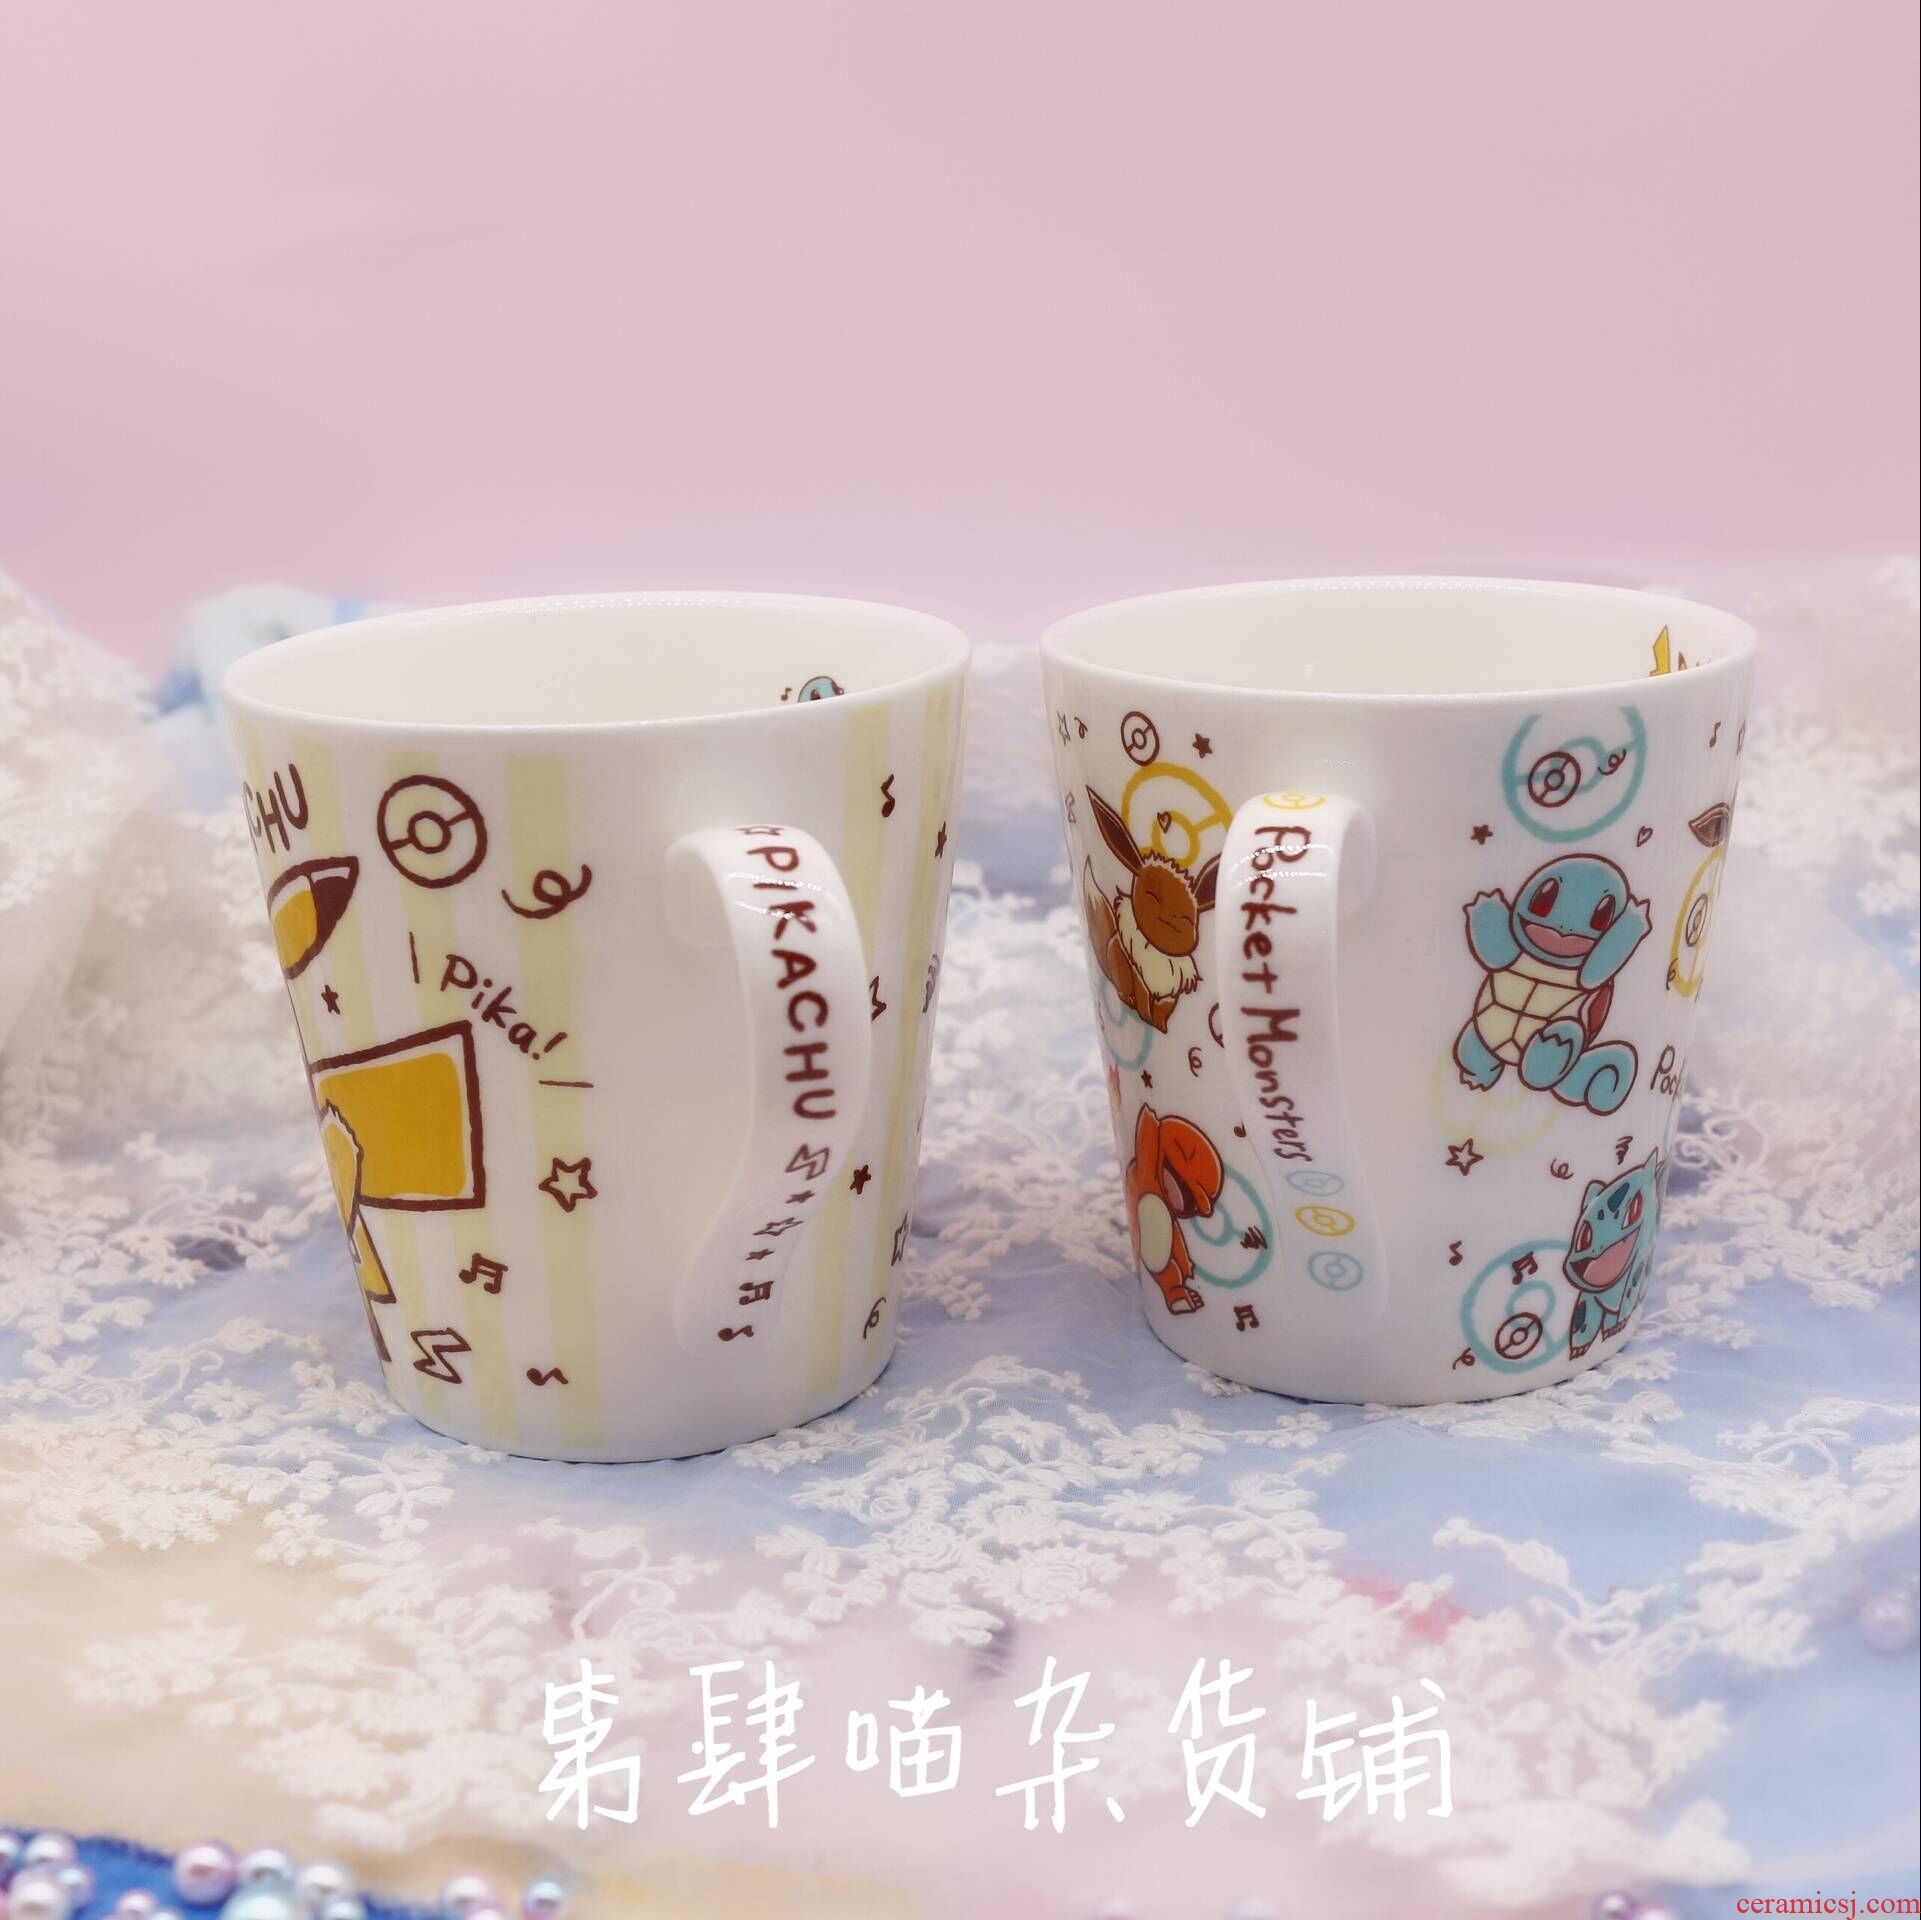 Pokemon Pikachu ceramic cup mug cup milk cup couples than qiaqiu lovely cup